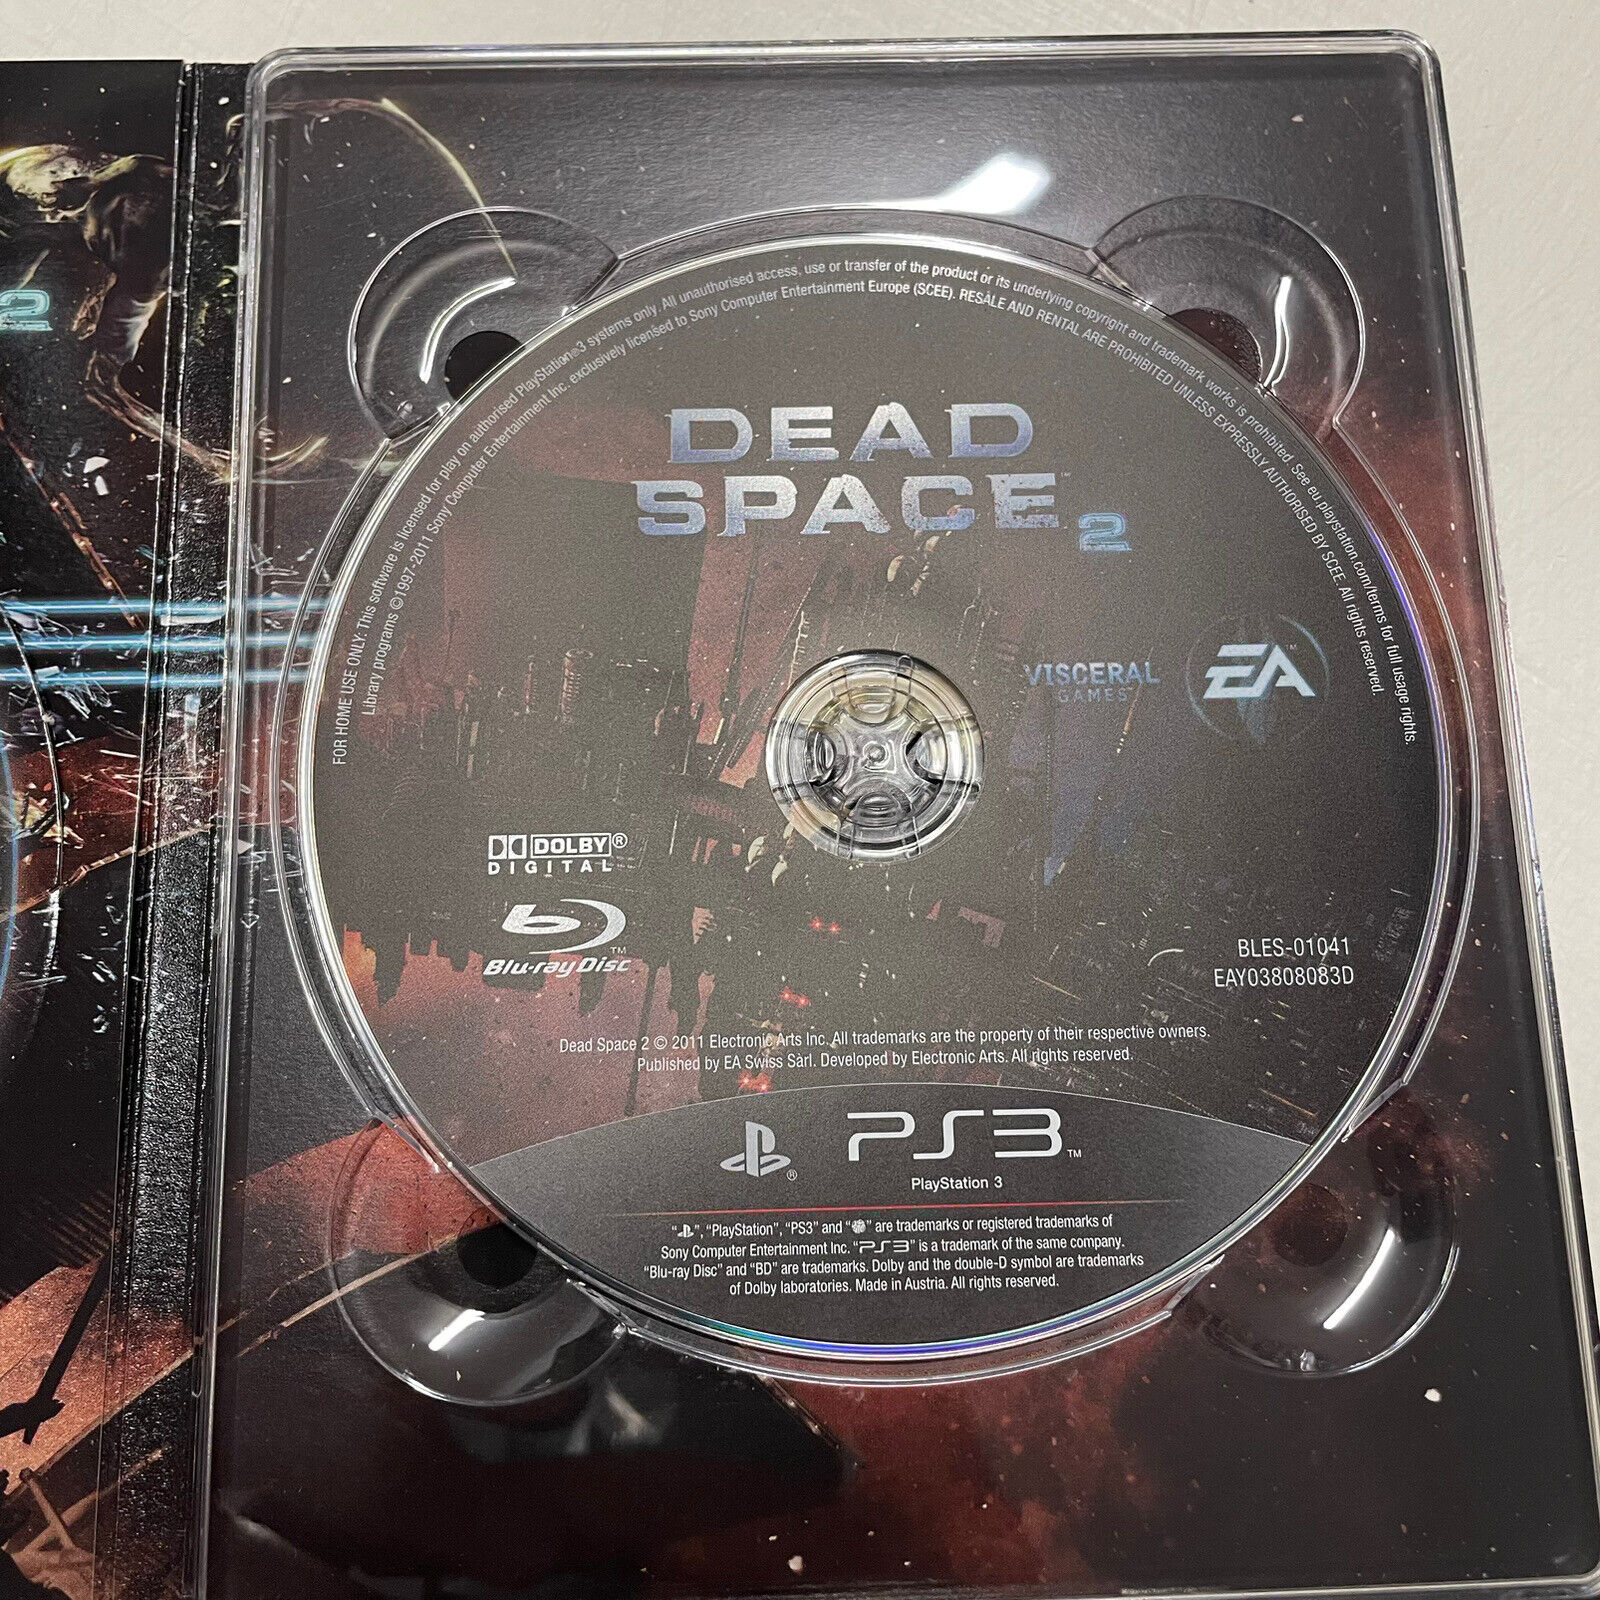 Ps3-DEAD-SPACE-2-Collectors-Edition-Sony-Playstation-Pal-ita-134530312972-5